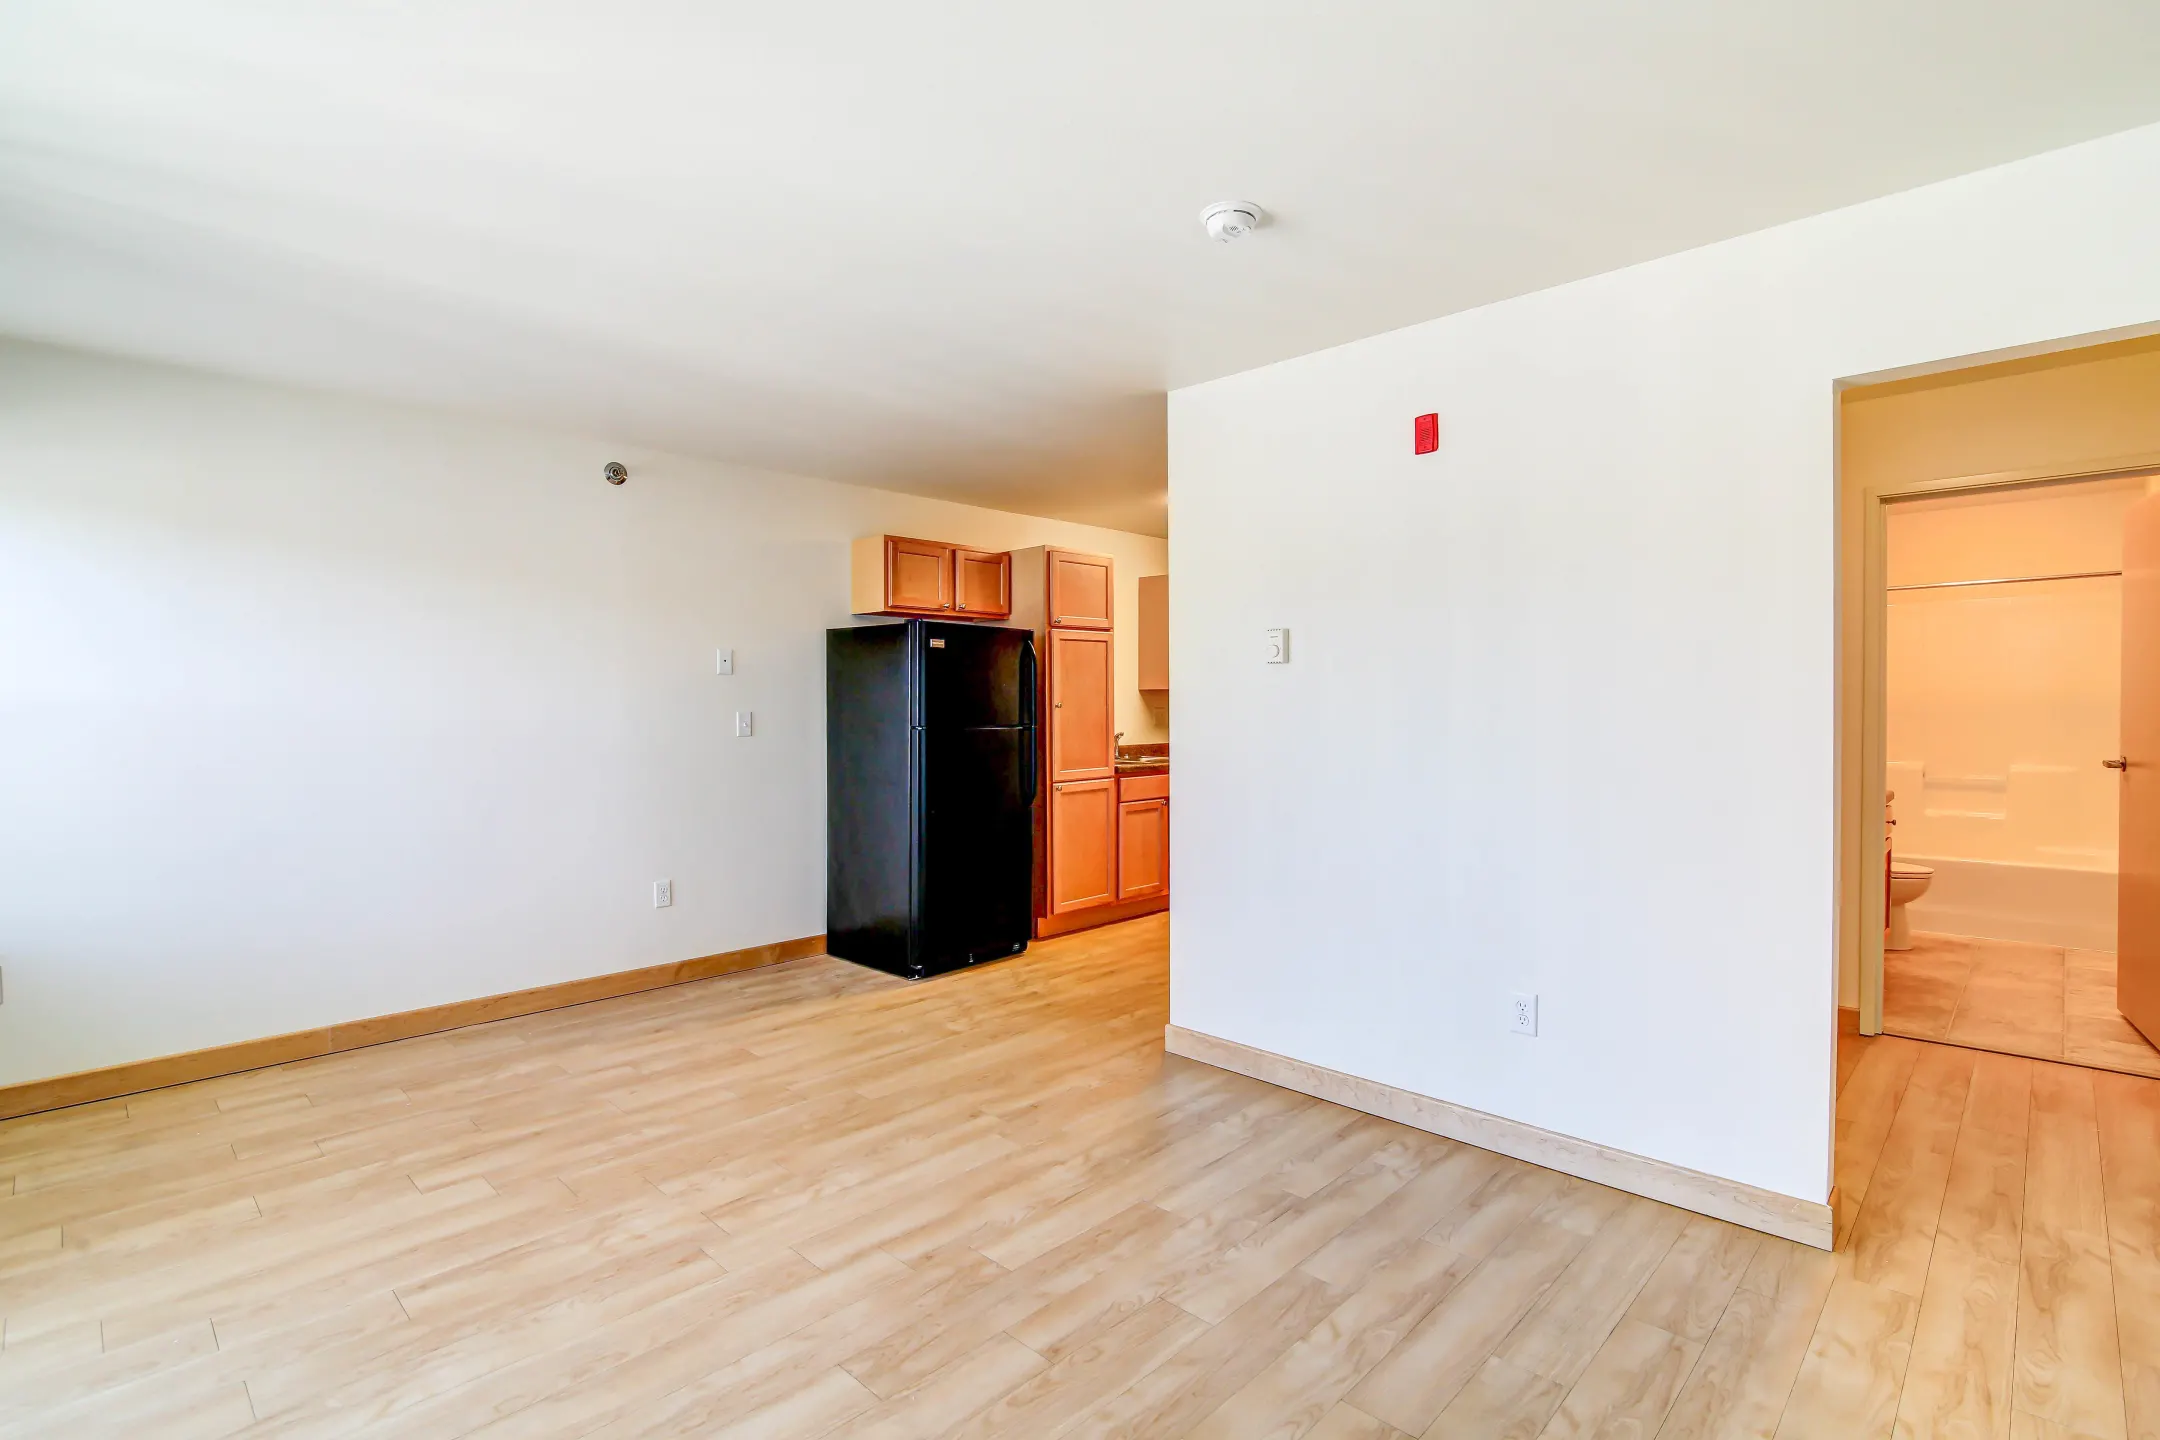 Living Room - Badlands Apartments - Williston, ND